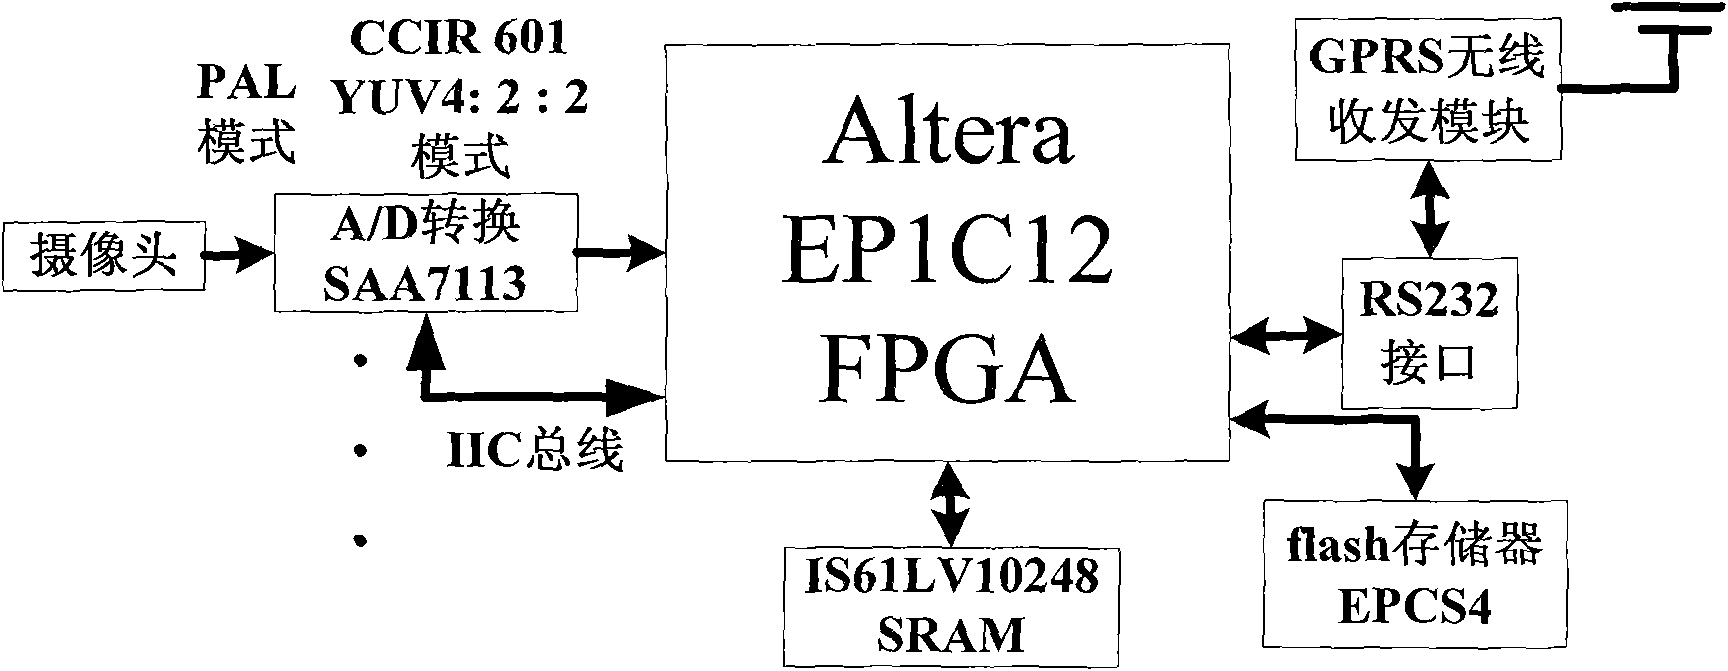 Embedded super-speed video detection method based on FPGA (Field Programmable Gate Array)